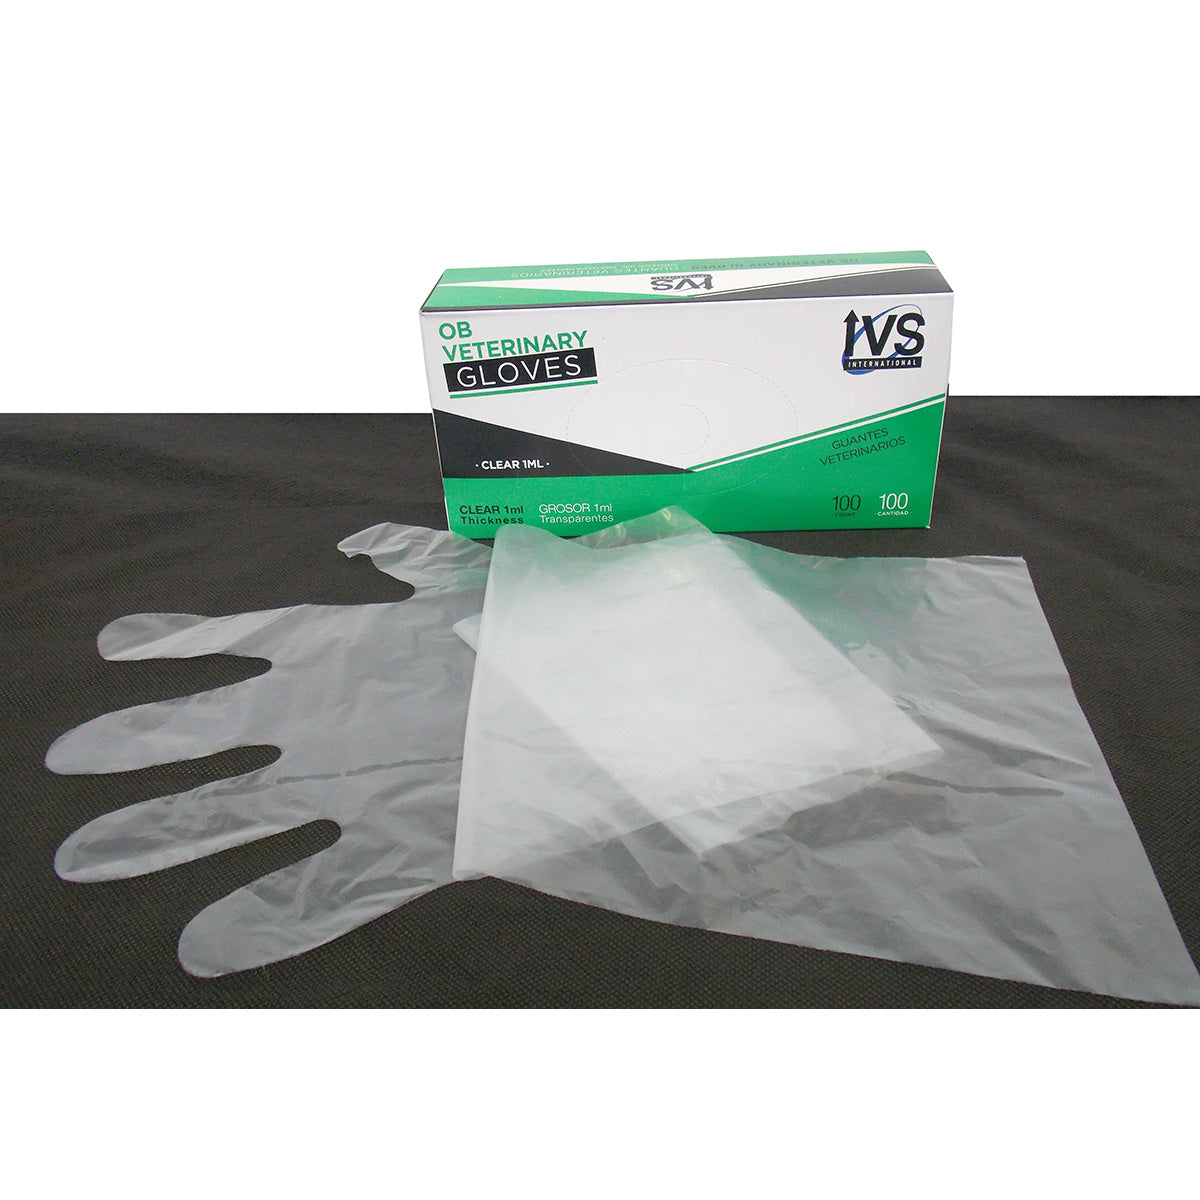 Clear Shoulder-Length OB Glove 1ML (Box of 100)